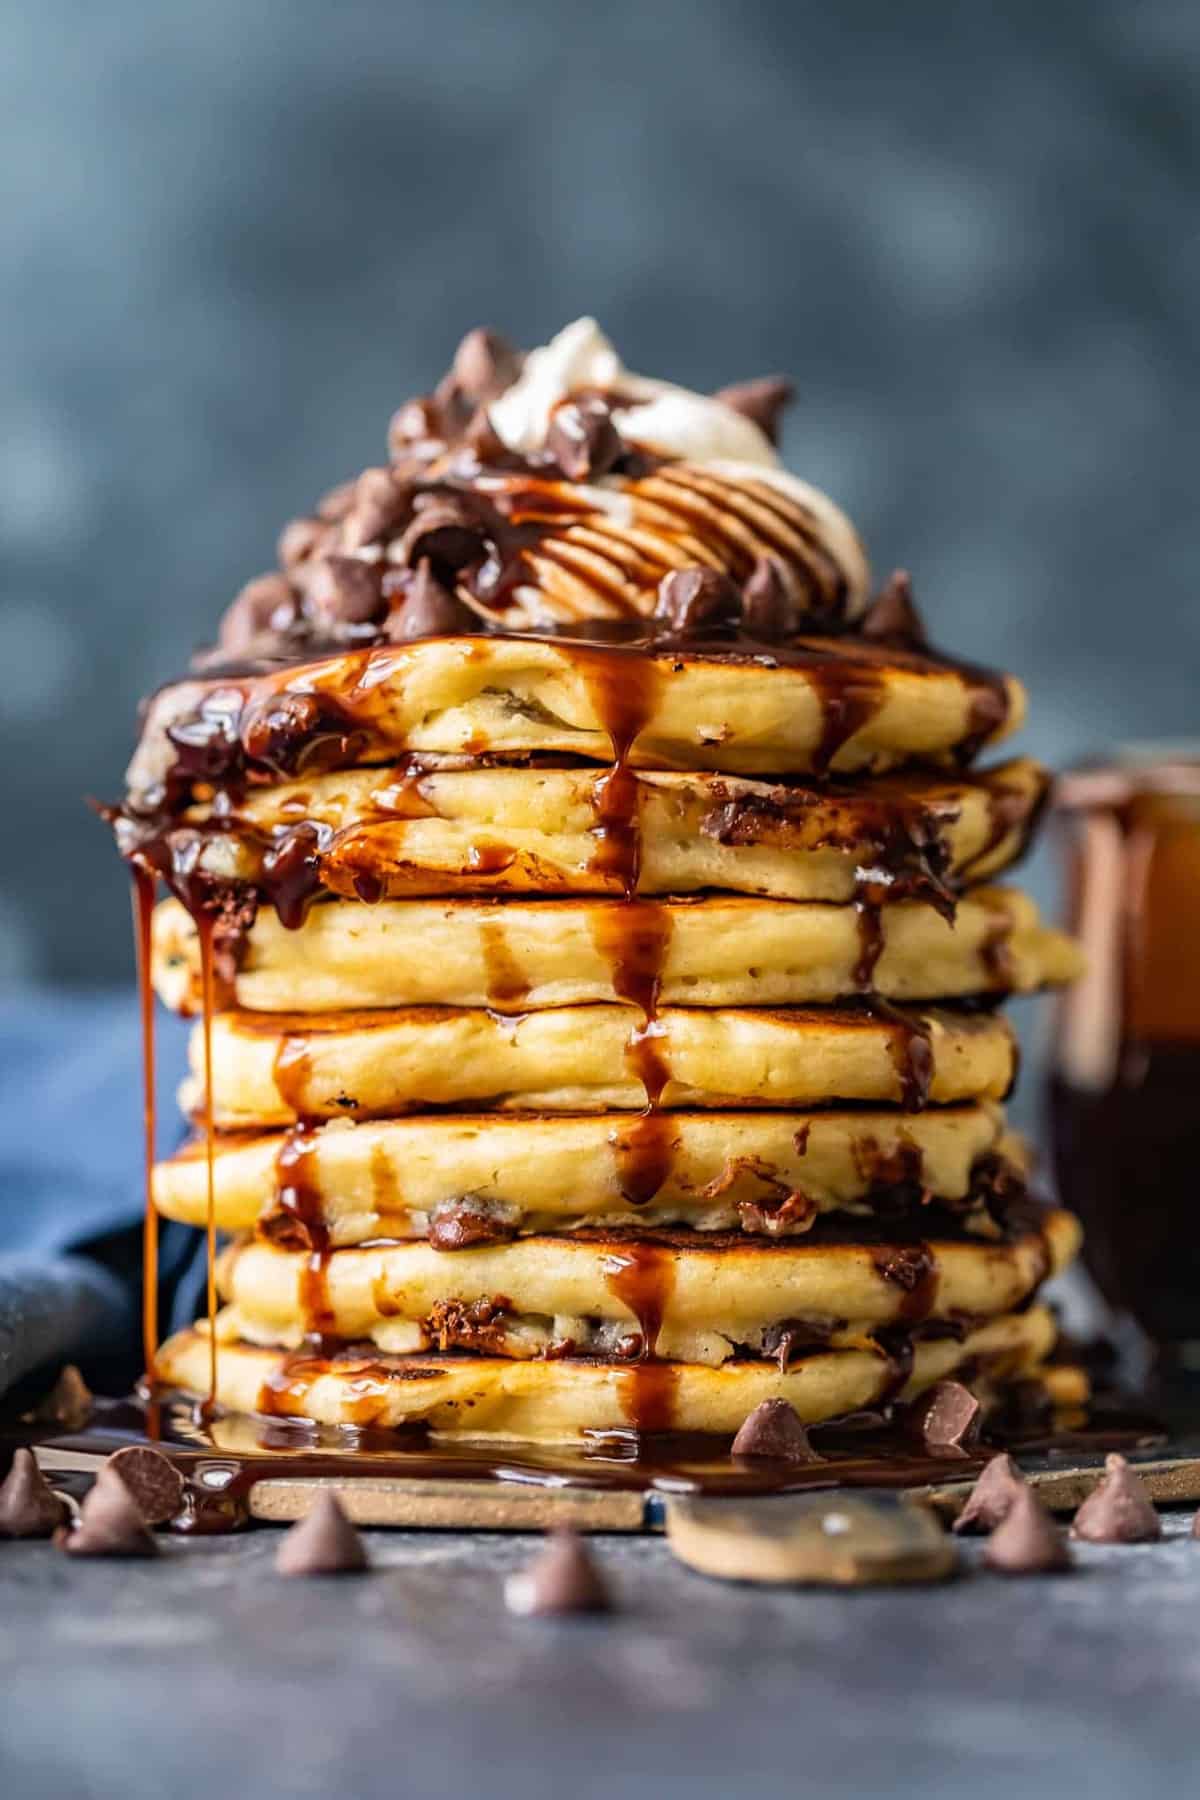 How to Make Pancakes + 9 Best Pancake Recipes - Recipe expert